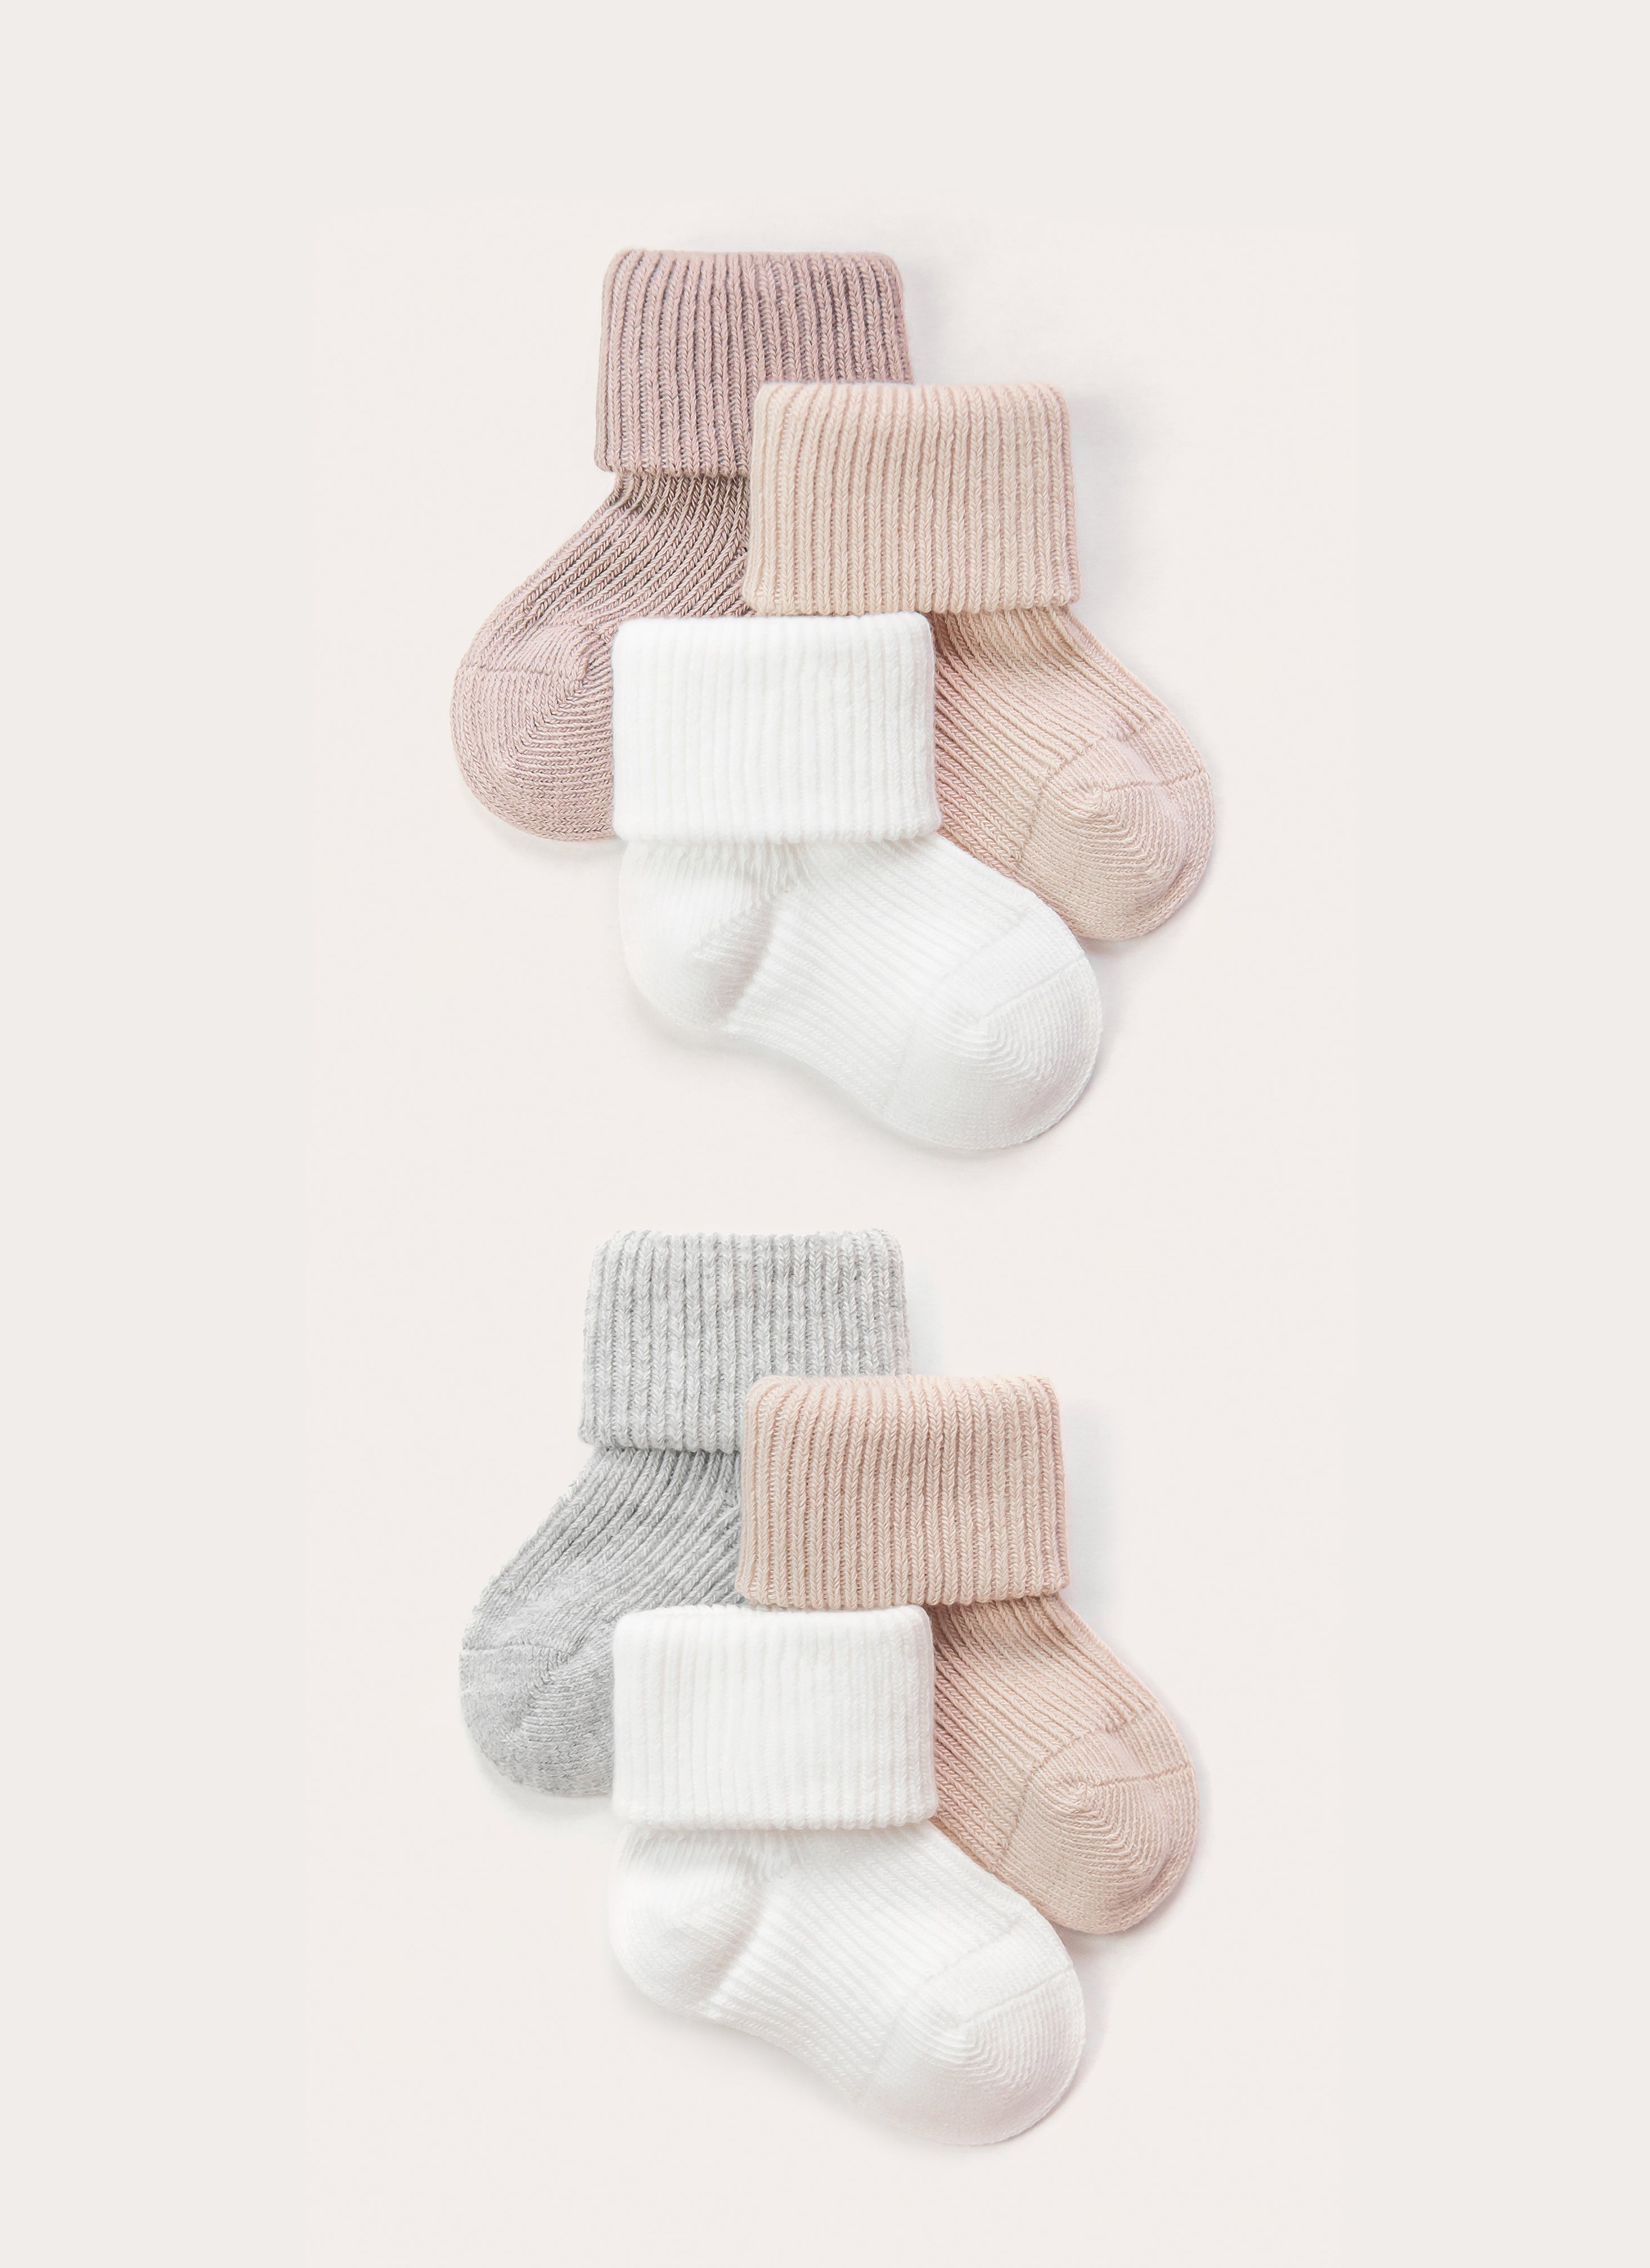 Soft Cotton Socks 6PC/Set (Brown, Grey, Nude, White)